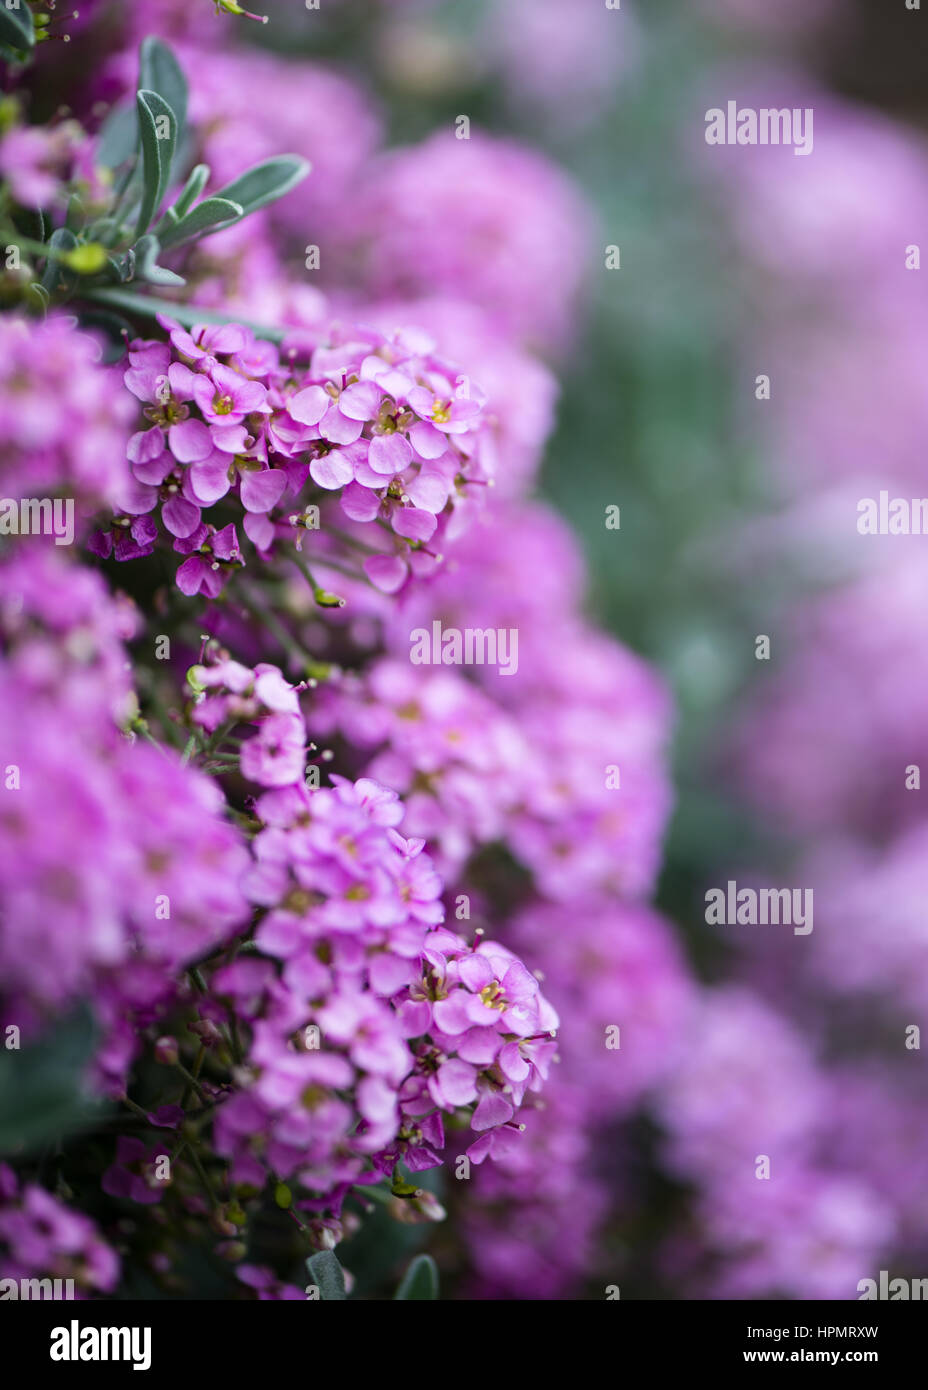 English sprig garden with purple phlox flowers Stock Photo